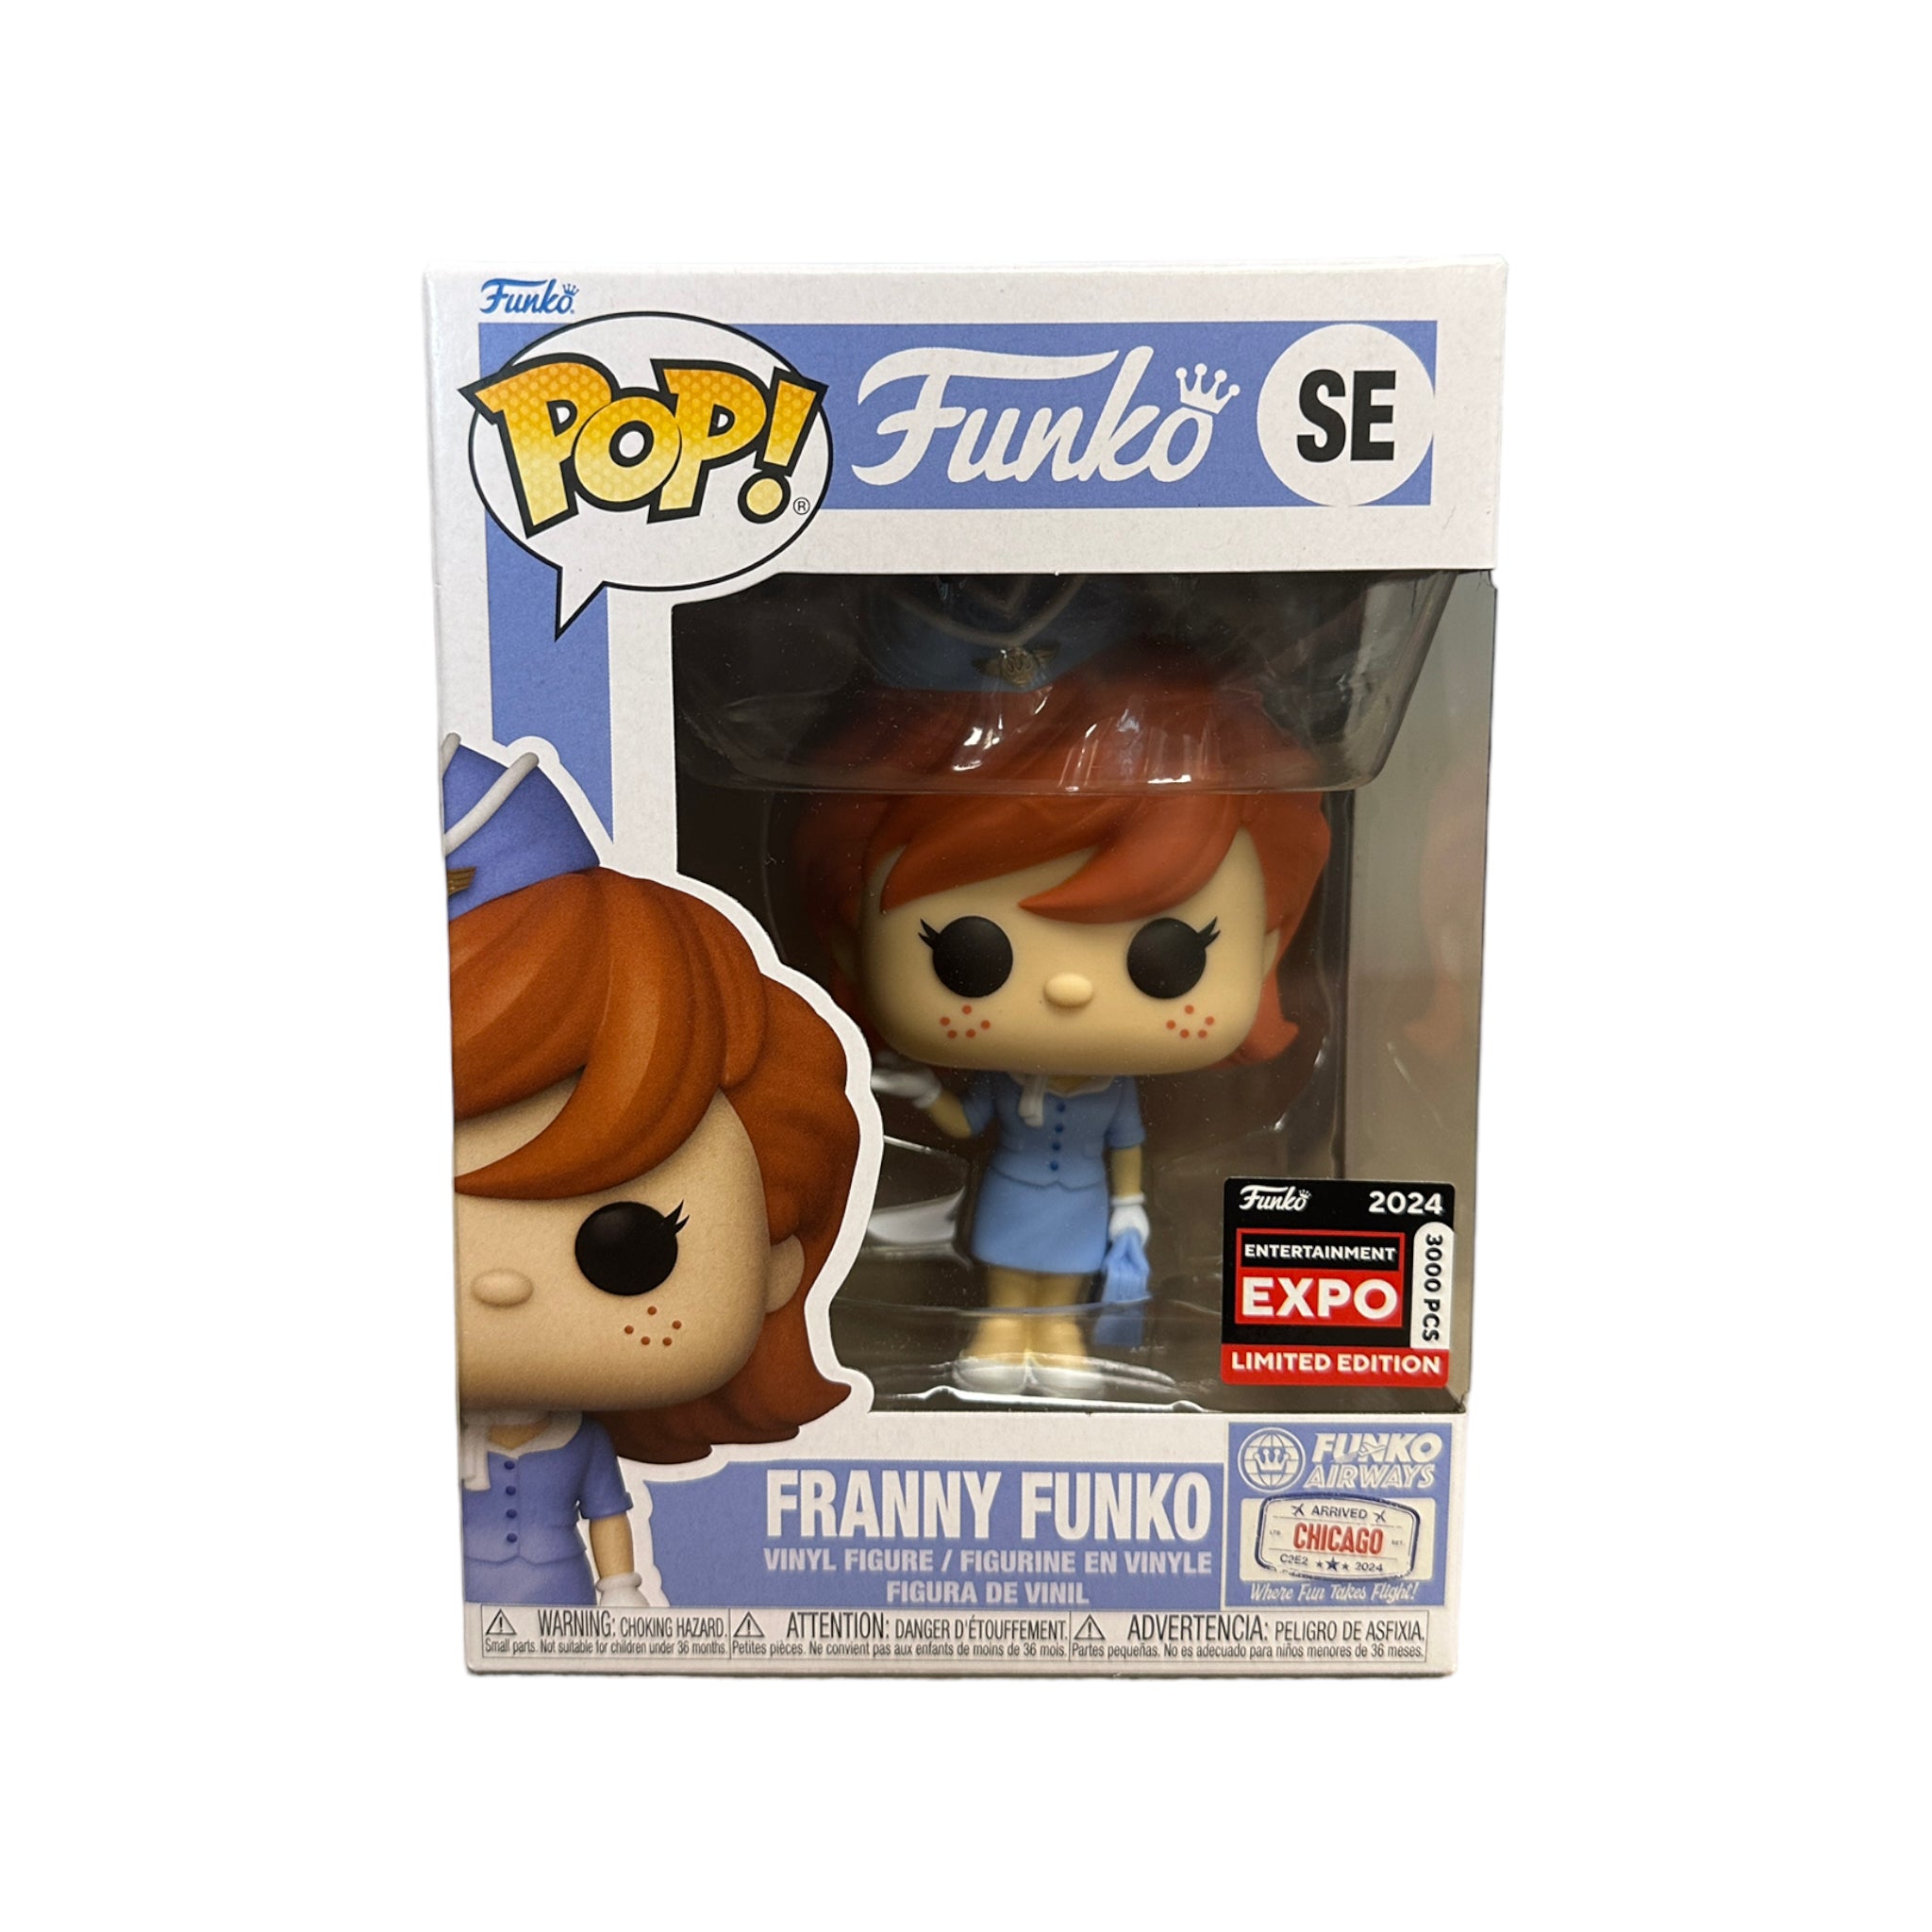 Franny Funko (In Stewardess Outfit) Funko Pop! - Funko Airways - C2E2 2024 Shared Exclusive LE3000 Pcs - Condition 7/10